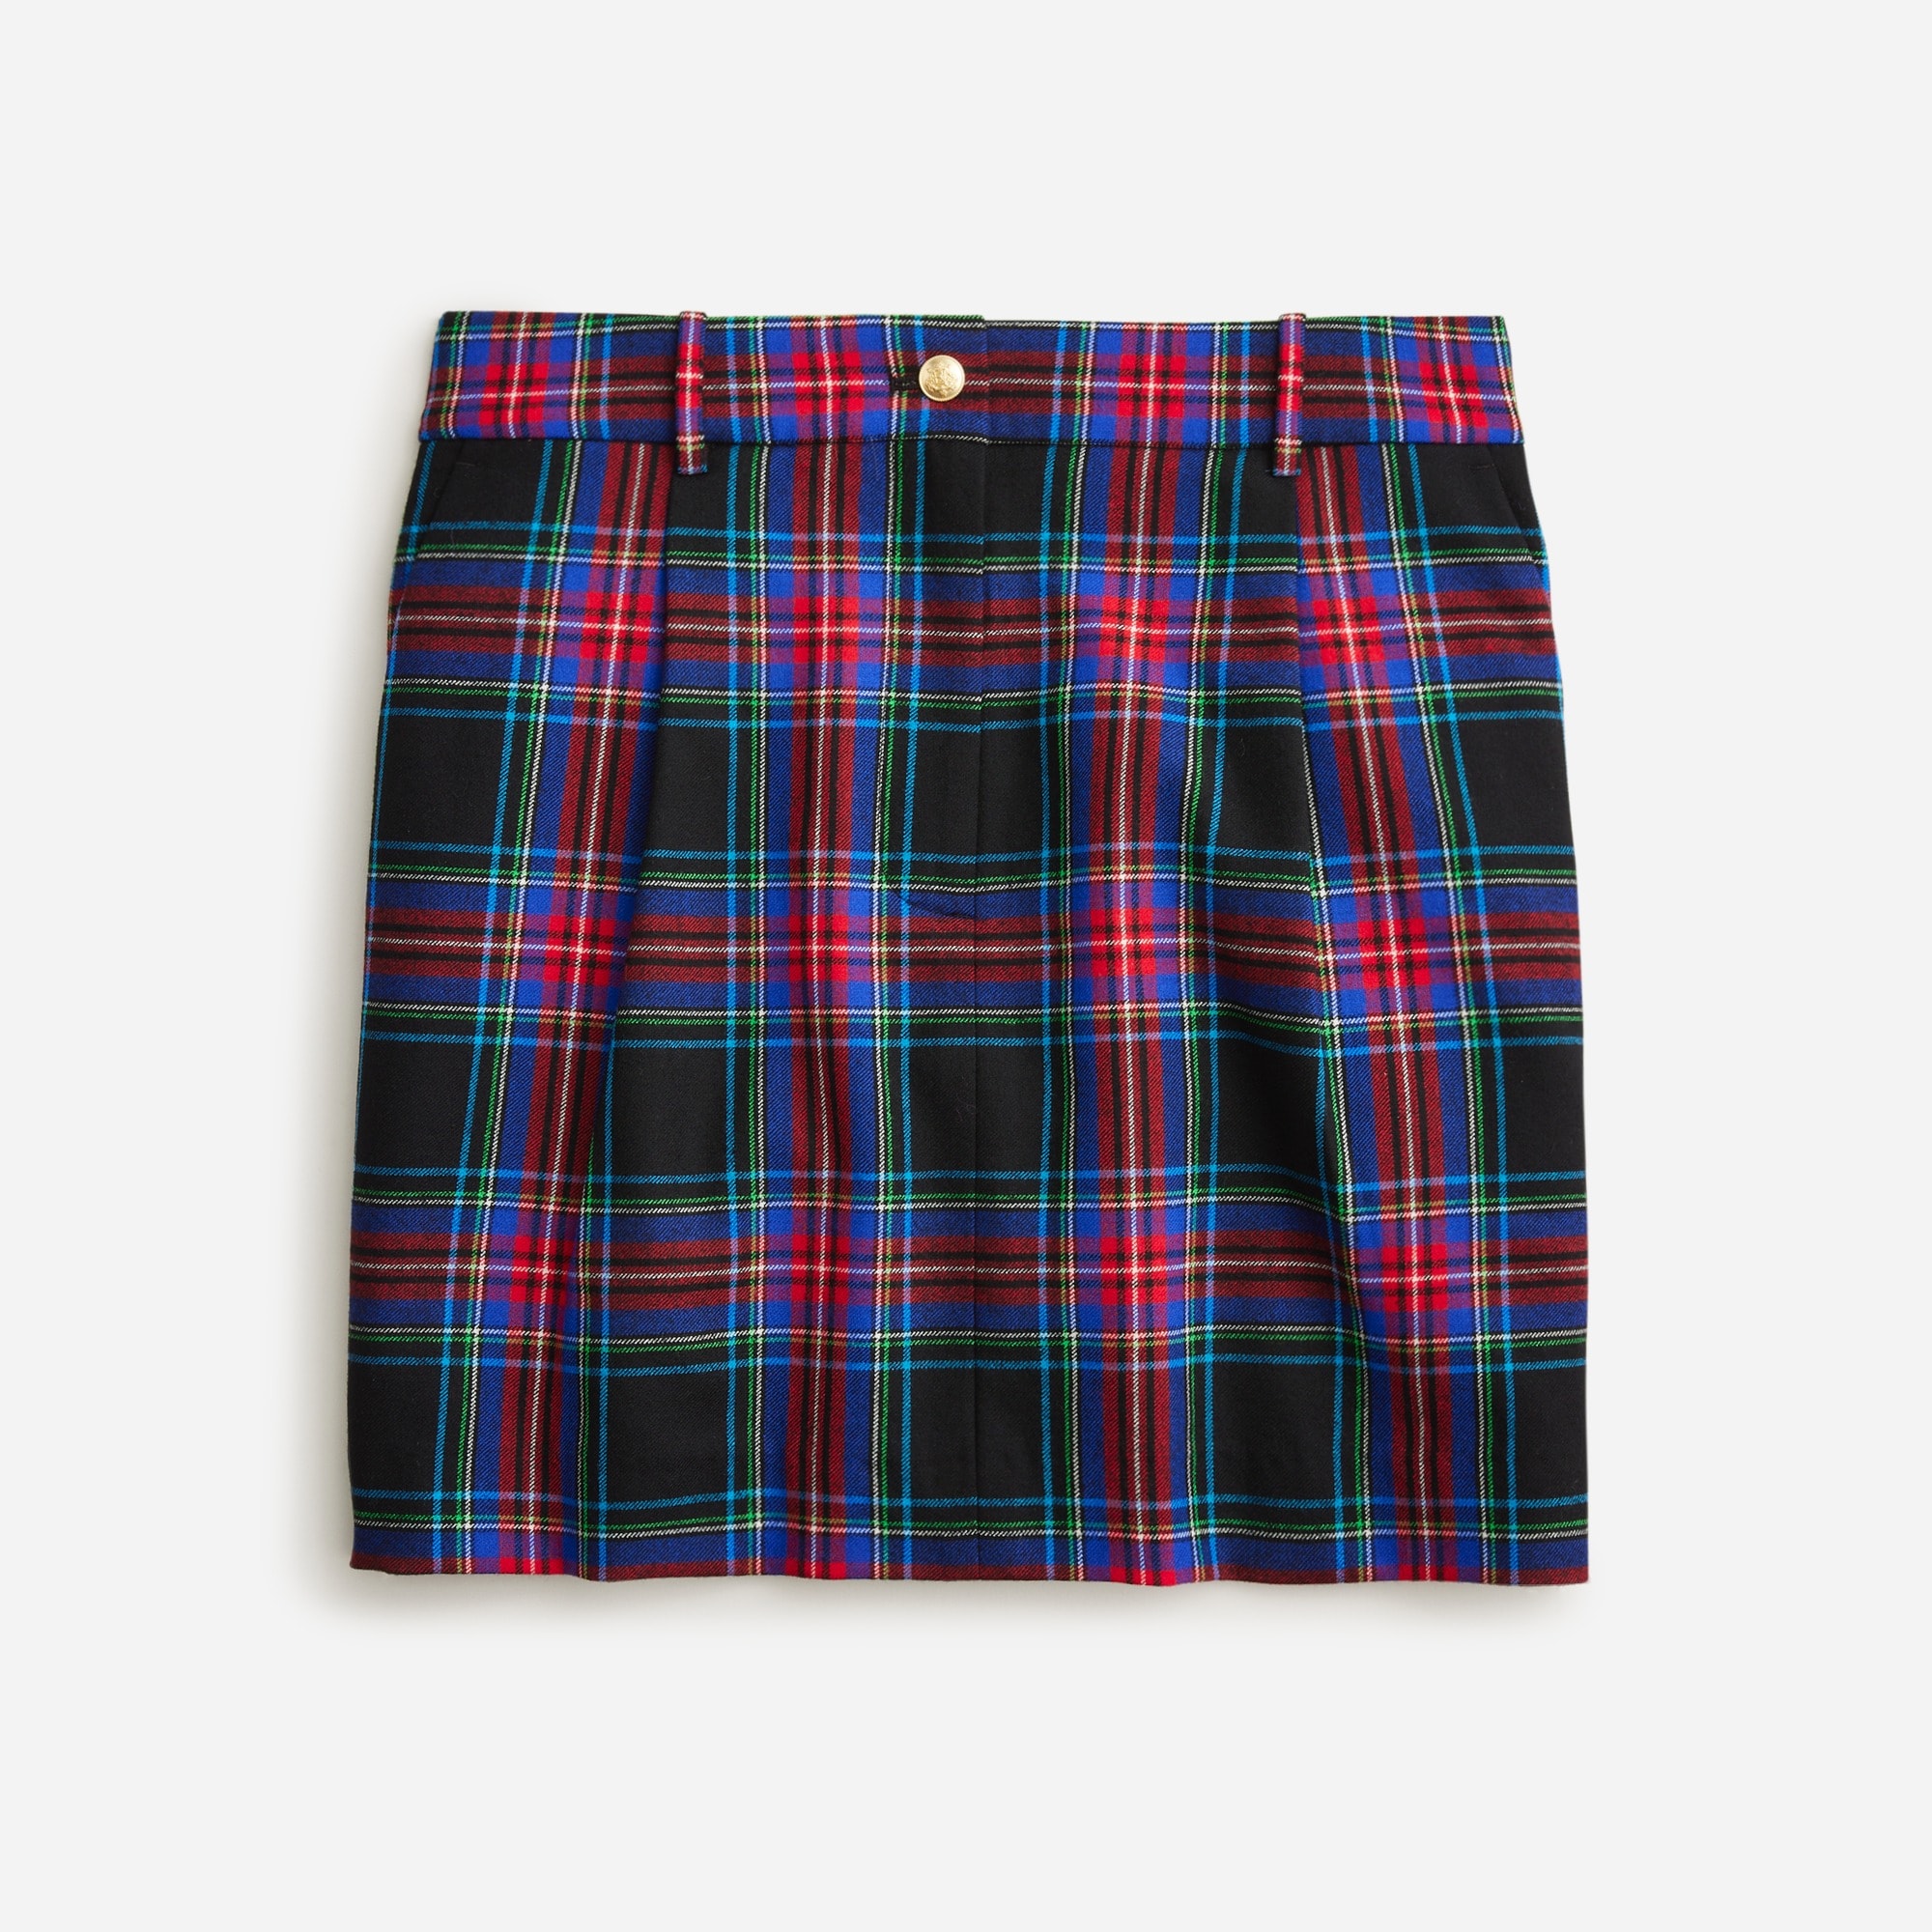  Trouser mini skirt in Stewart tartan